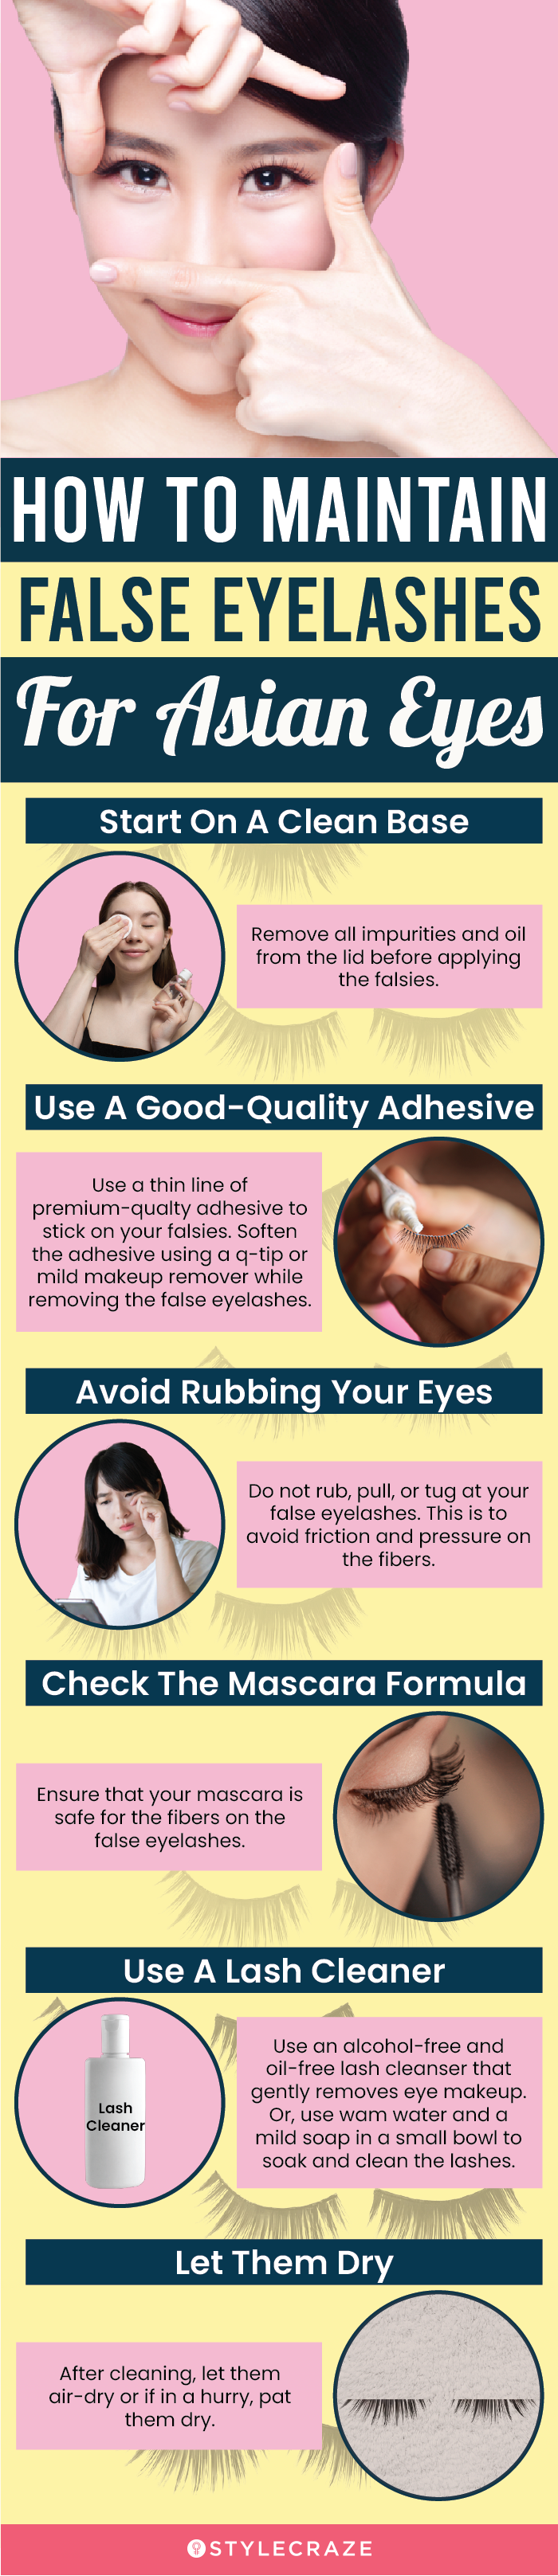 How To Maintain False Eyelashes For Asian Eyes (infographic)